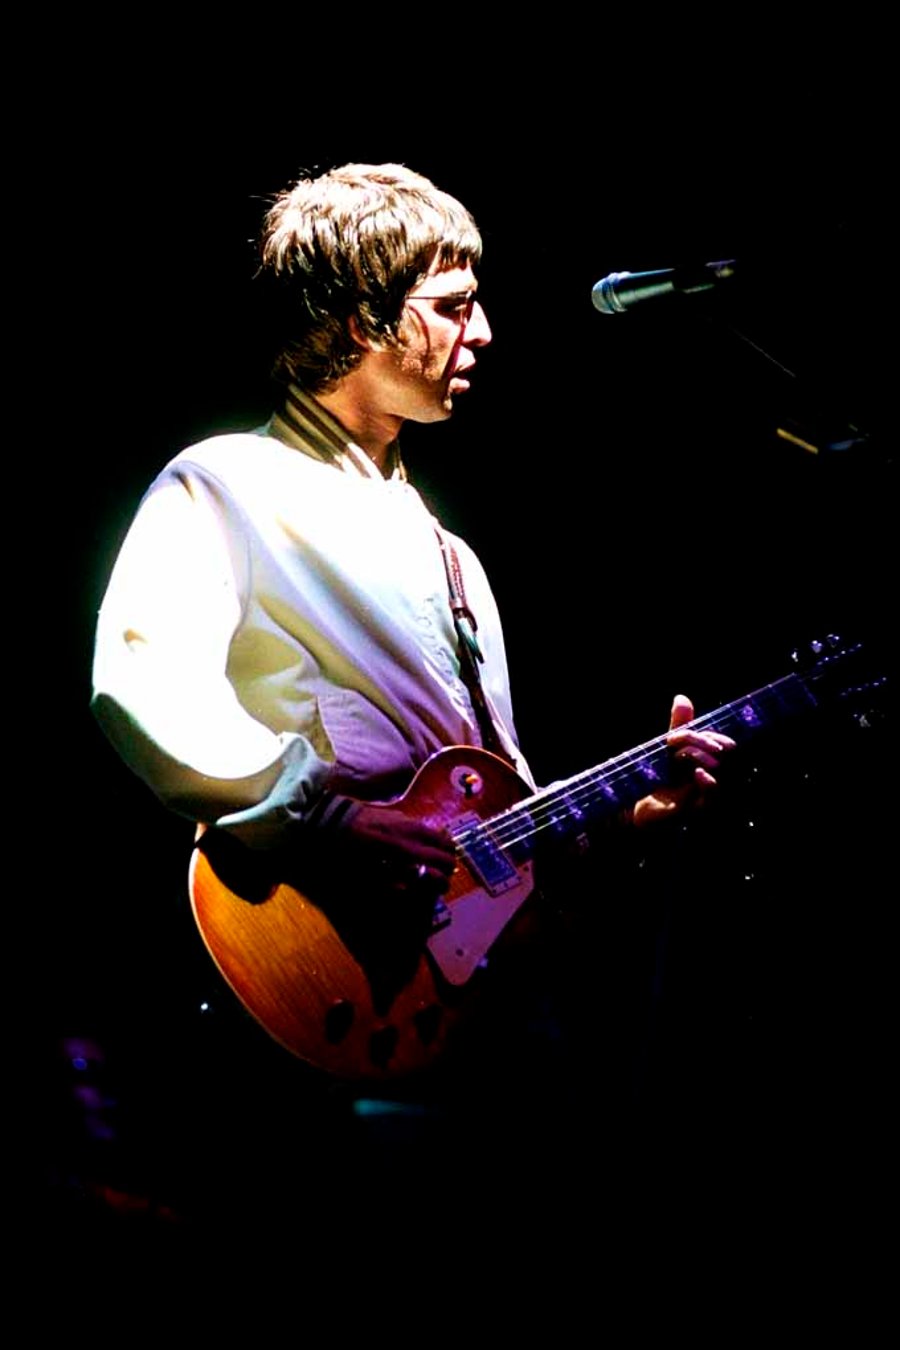 Noel Gallagher Oasis Reading Rock Festival Photograph Print